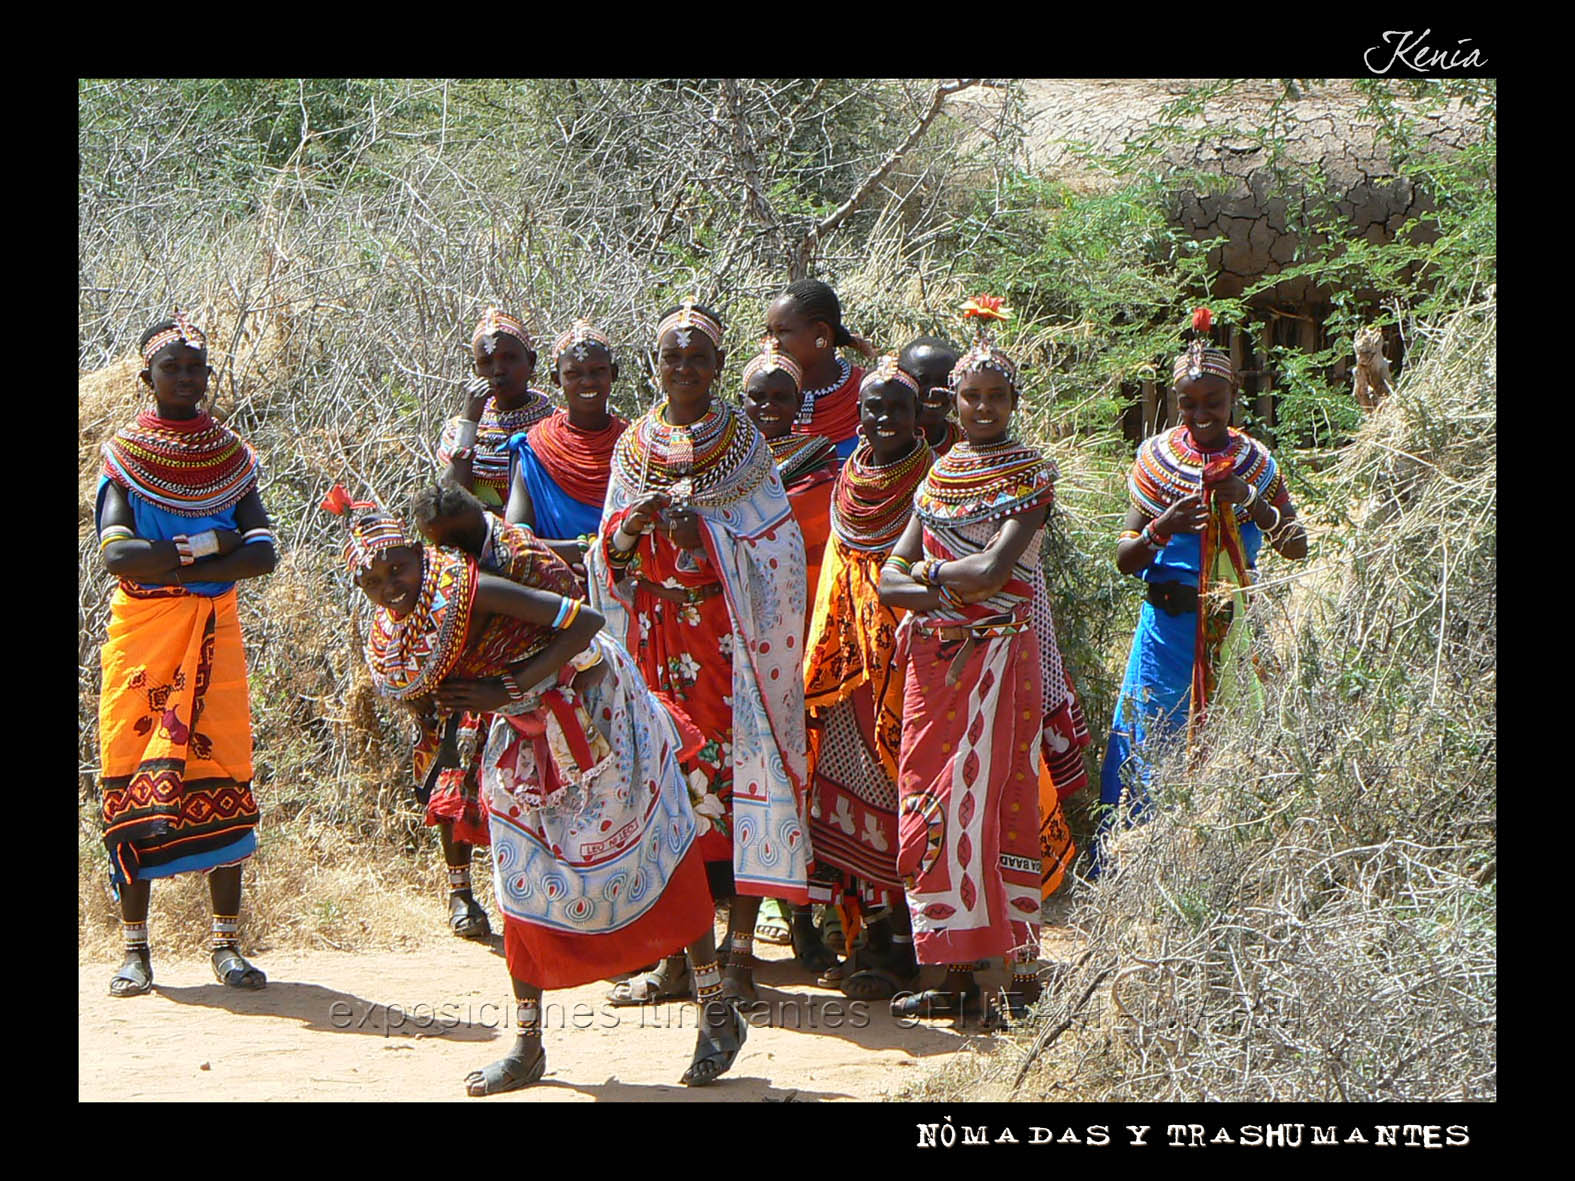 Grupo de mujeres con vestidos coloridos en Kenia